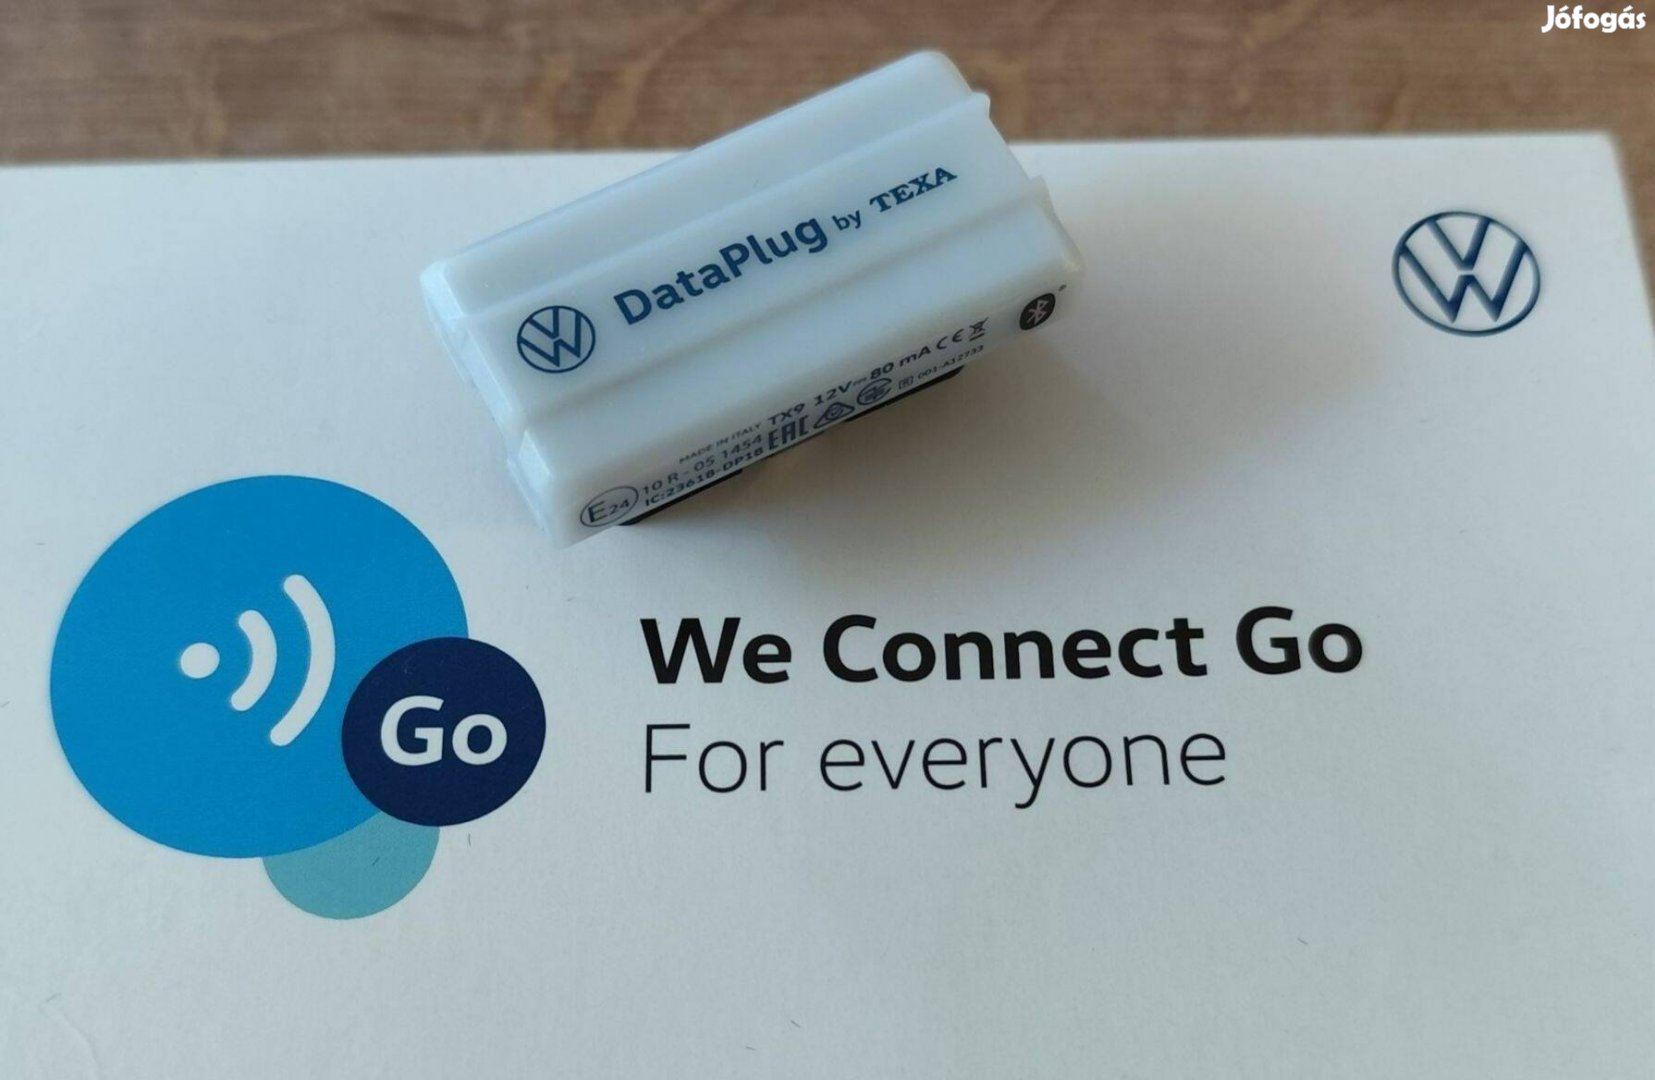 Volkswagen Bluetooth adapter We Connect Go Dataplug